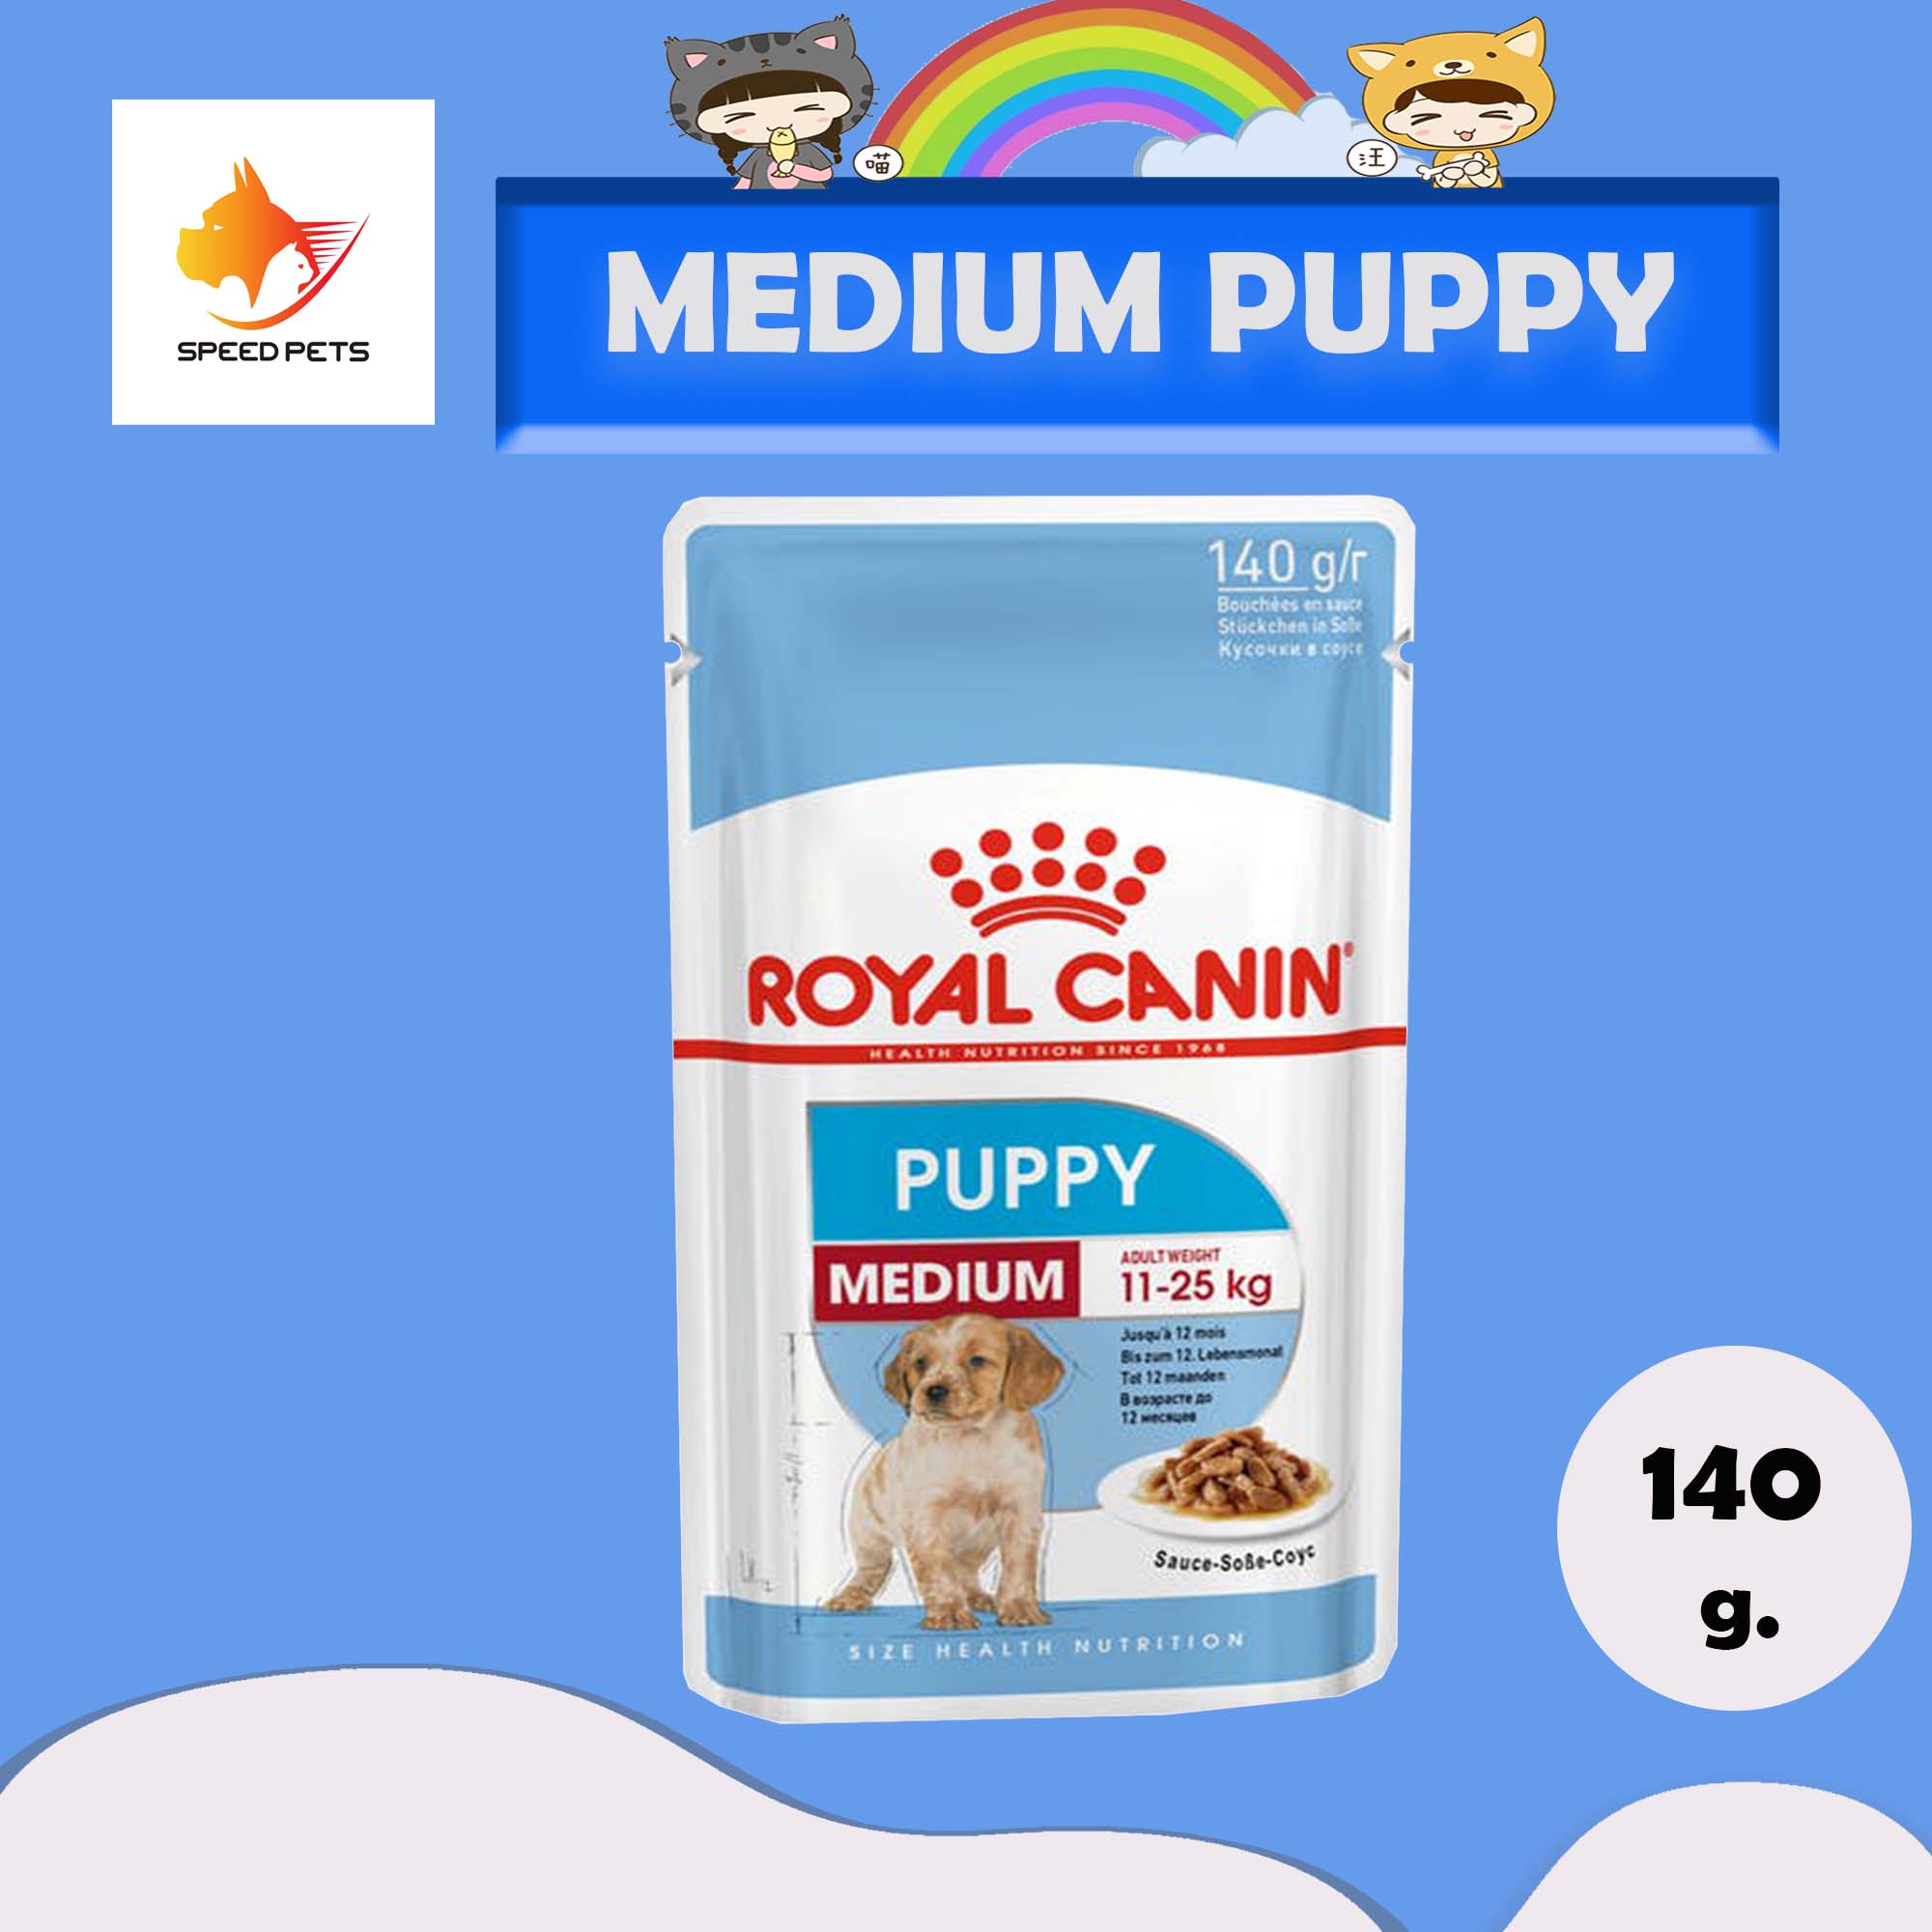 Royal Canin Medium Puppy Wet Dog Food Pouches โรยัล คานิน อาหารเปียก สุนัข ลูก พันธุ์กลาง แบบซอง ขนาด 140g